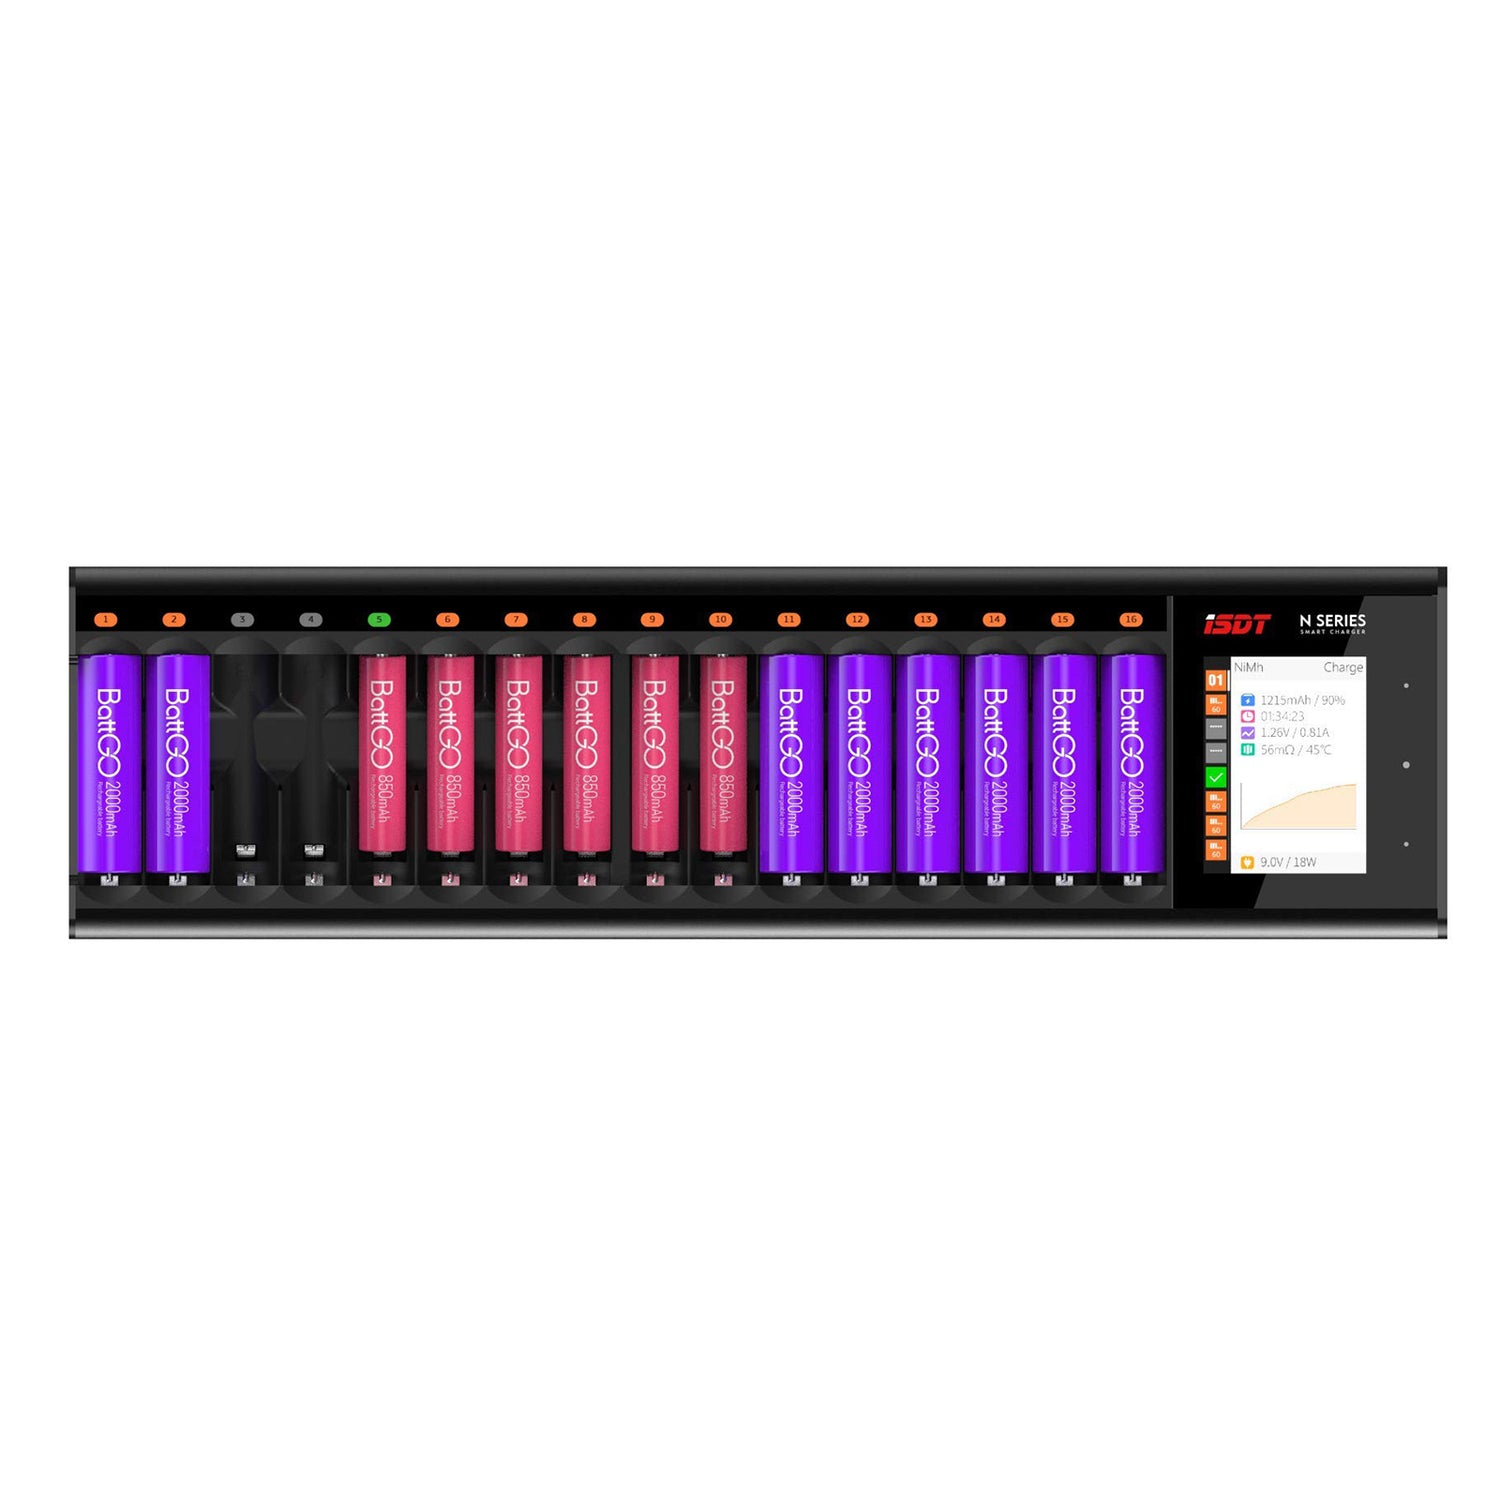 Caricatore della batteria a 16 slot N16 LCD per batterie ricaricabili, caricabatterie veloci da 36W per batterie AA/AAA